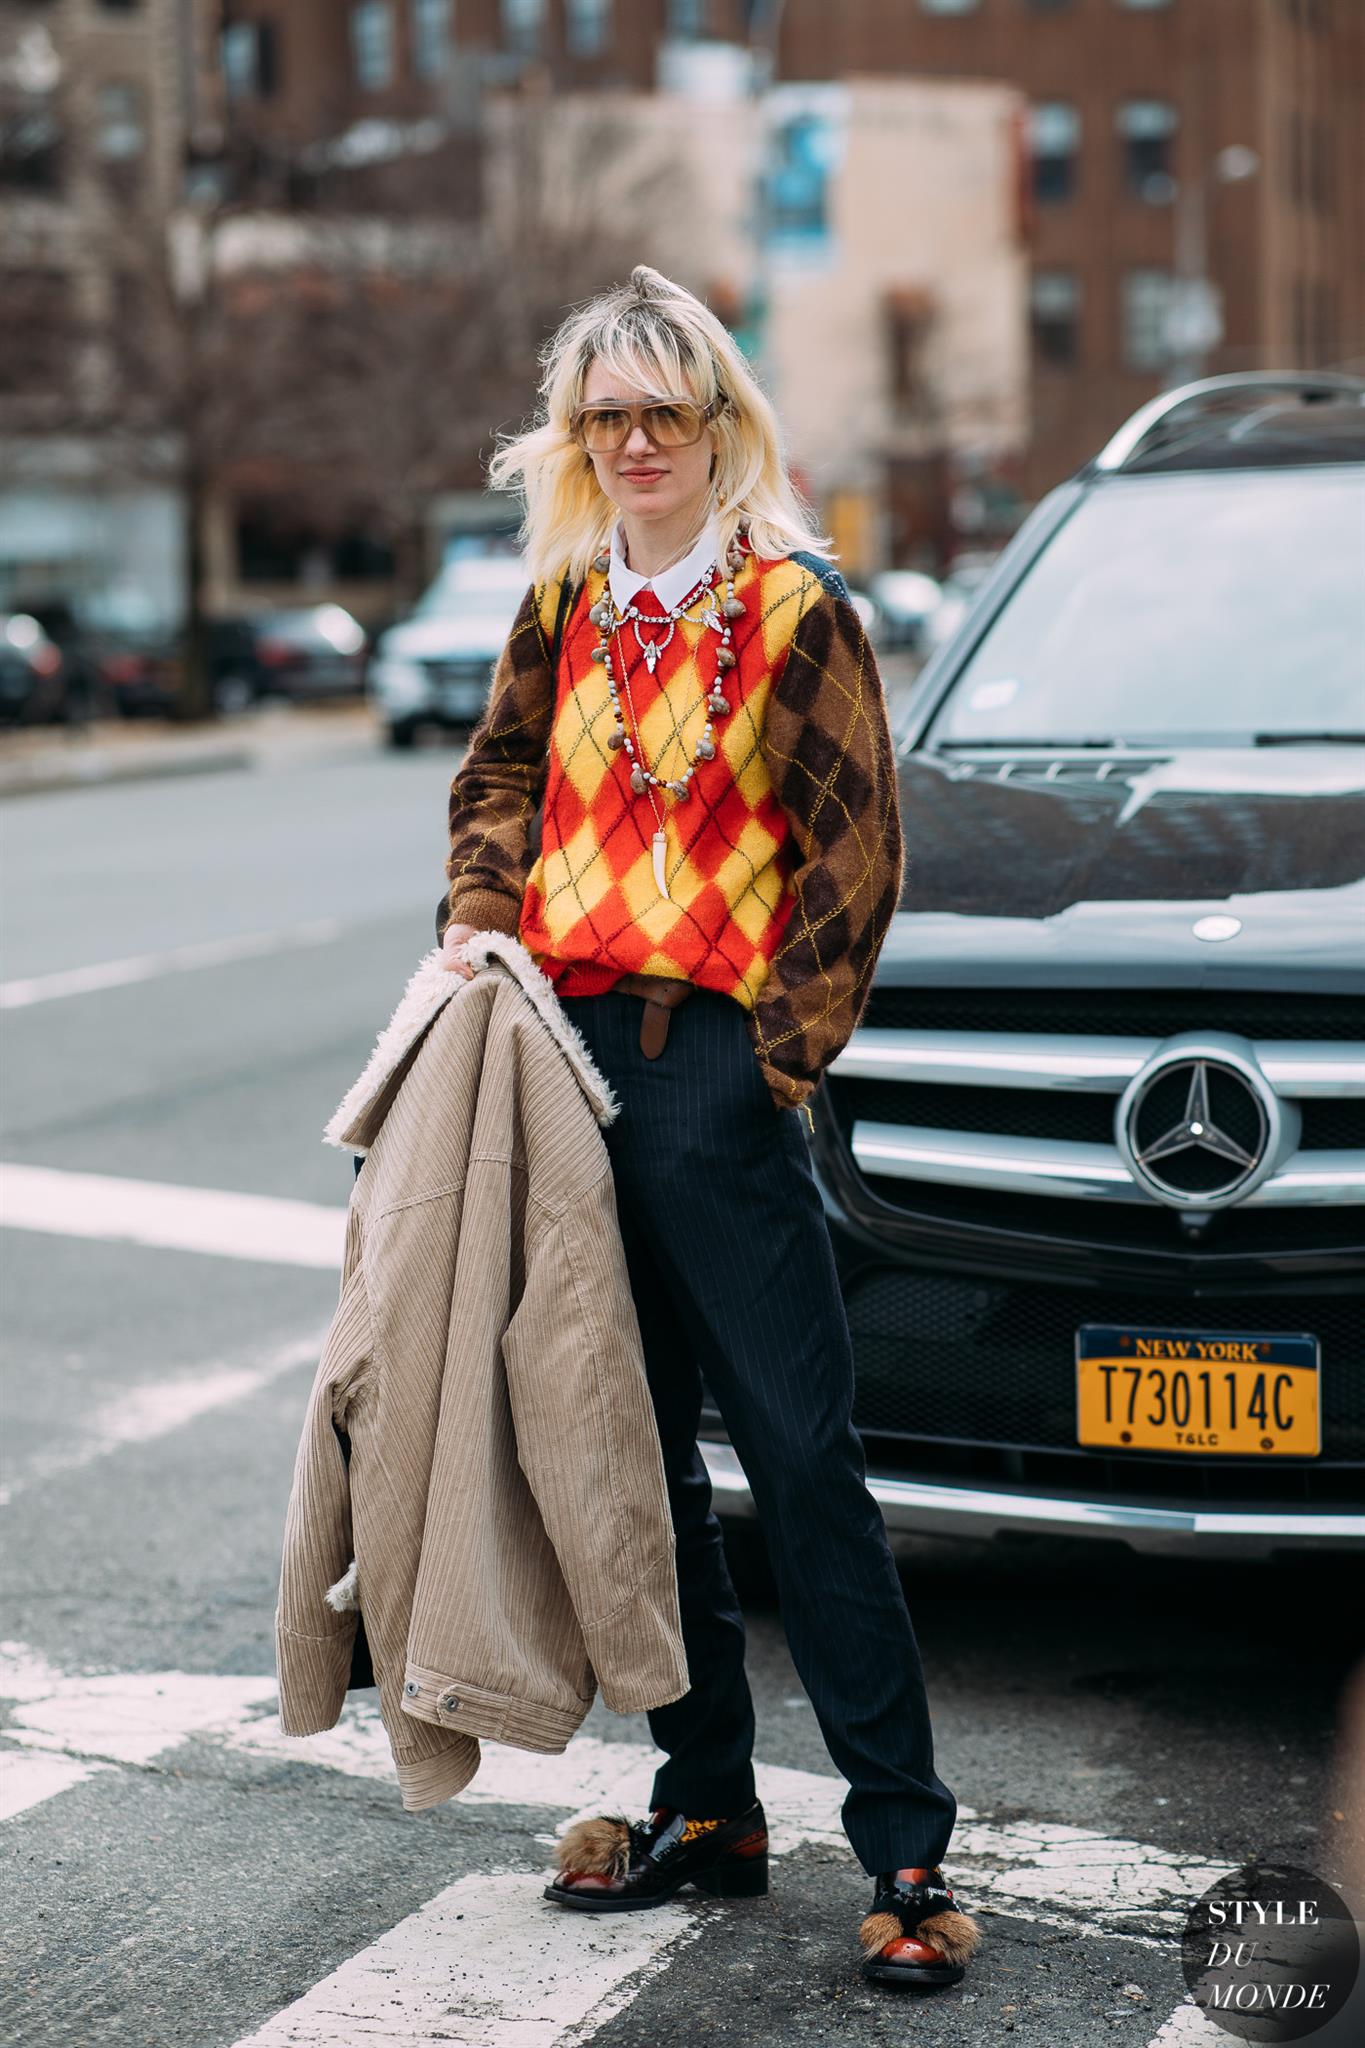 Phoebe-Arnold-by-STYLEDUMONDE-Street-Style-Fashion-Photography-NY-FW18-20180212_48A9501.jpg